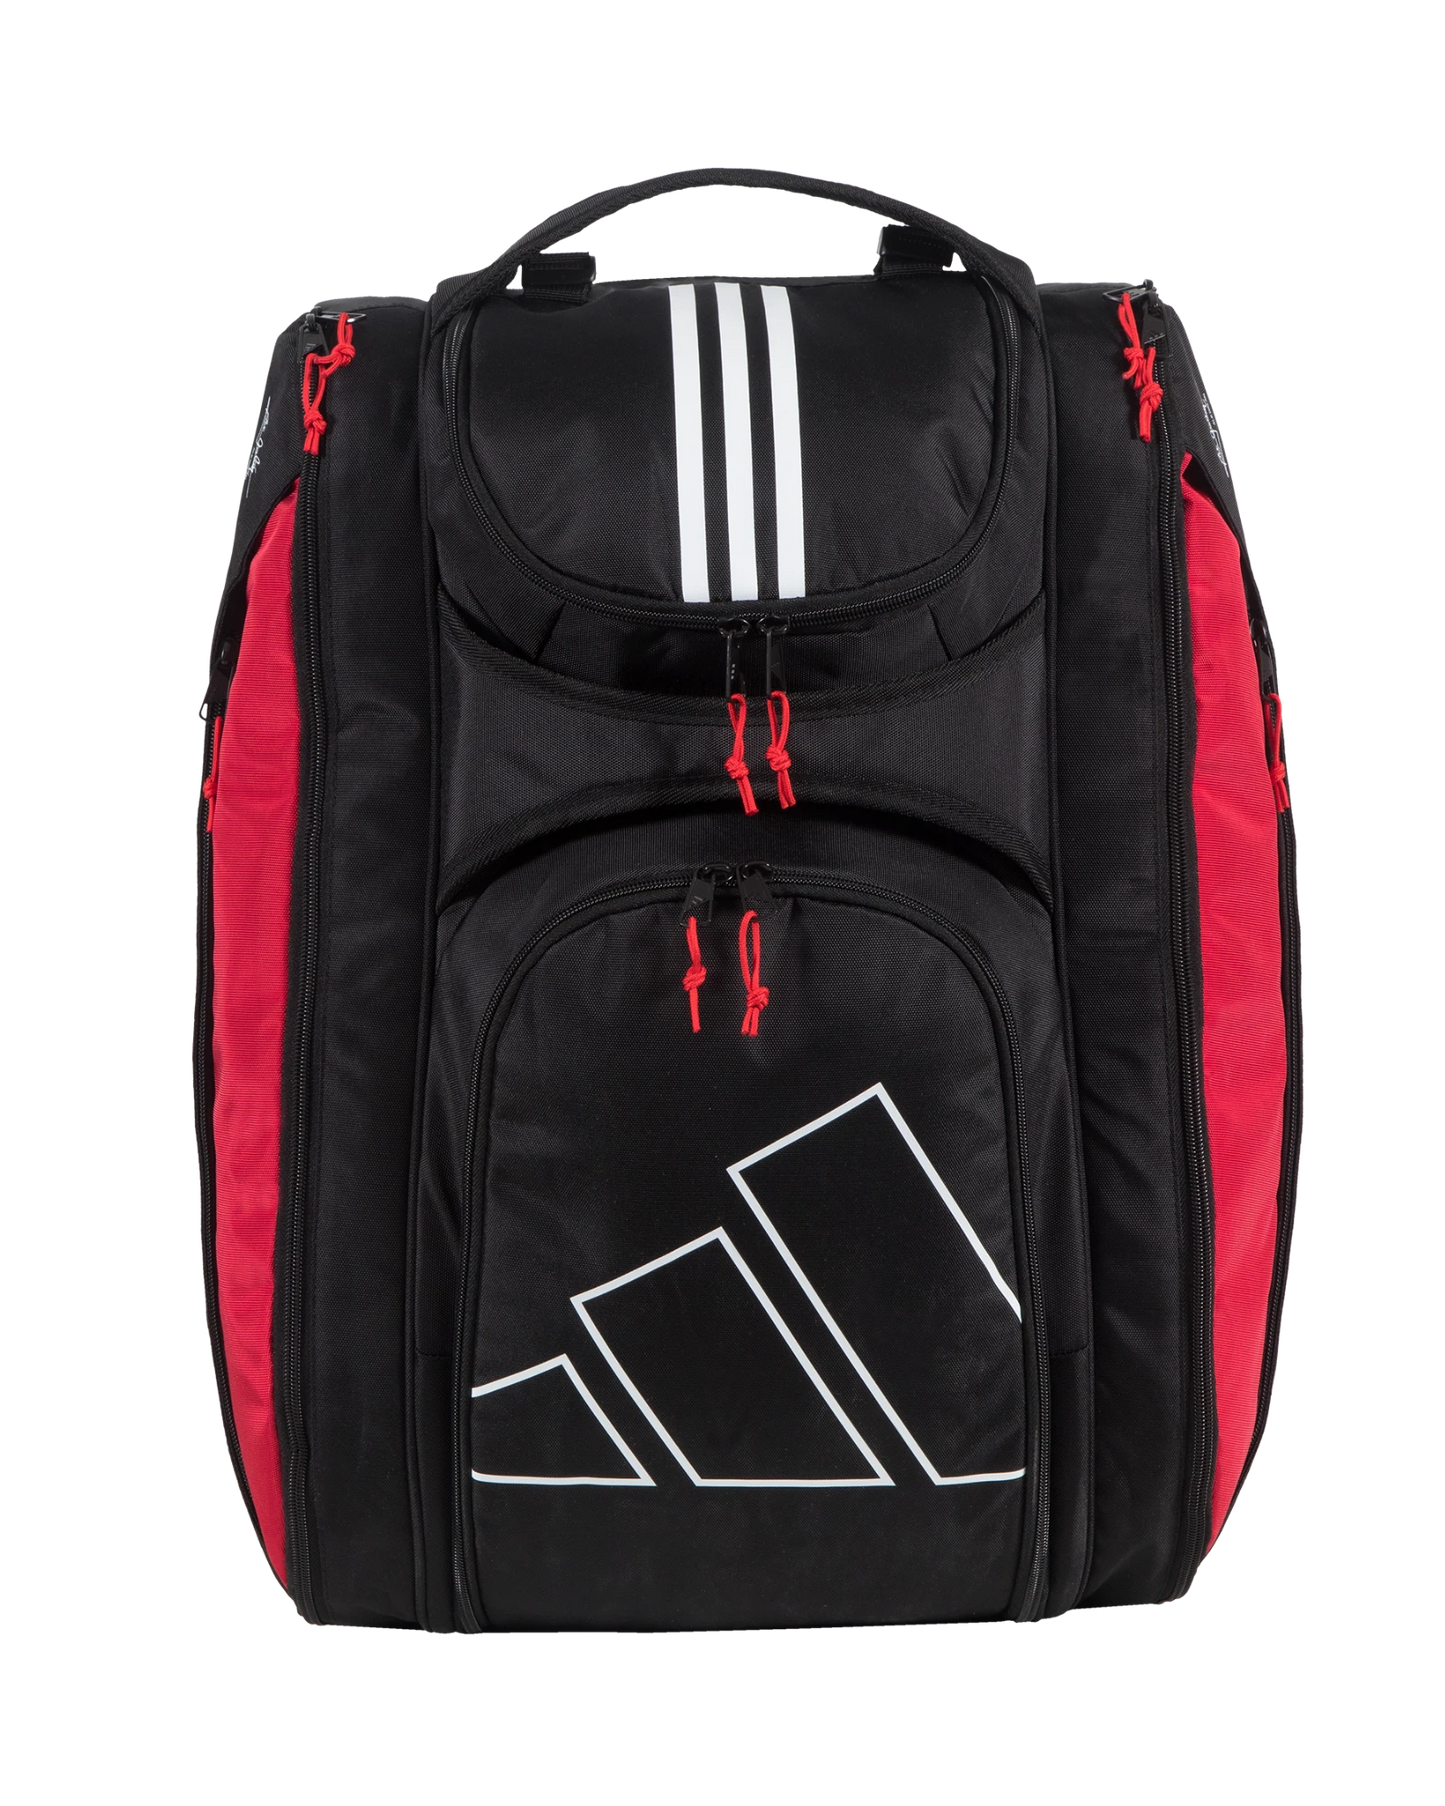 The Adidas Multigame Black 3.3 2024 Padel Bag